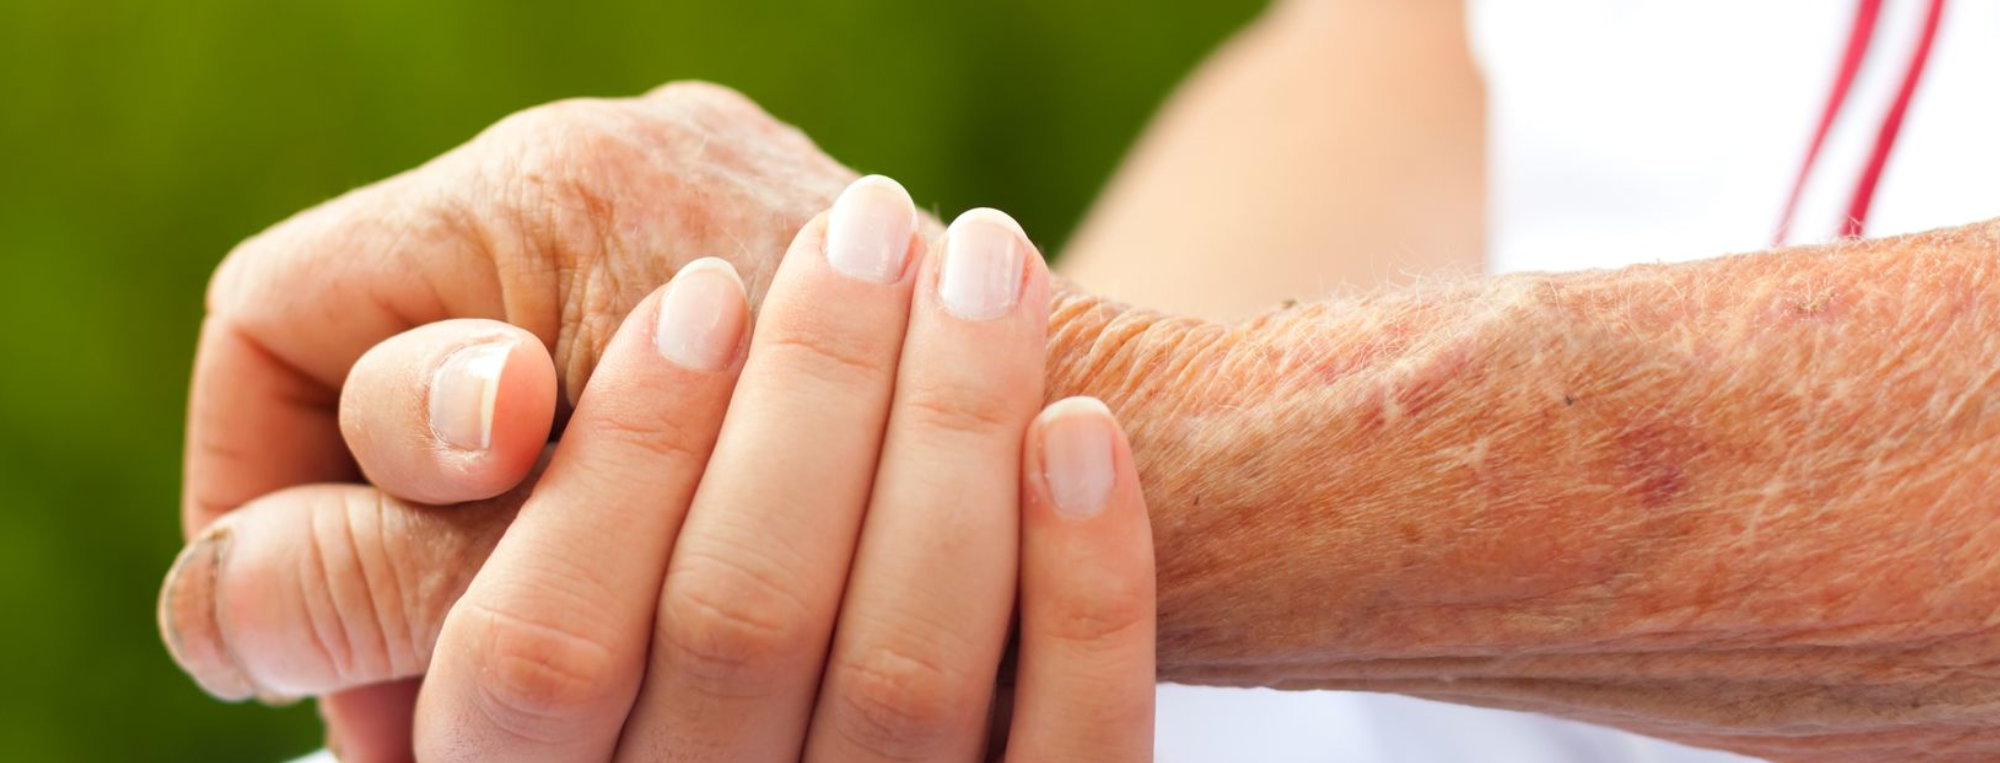 caregiver and senior holding hands